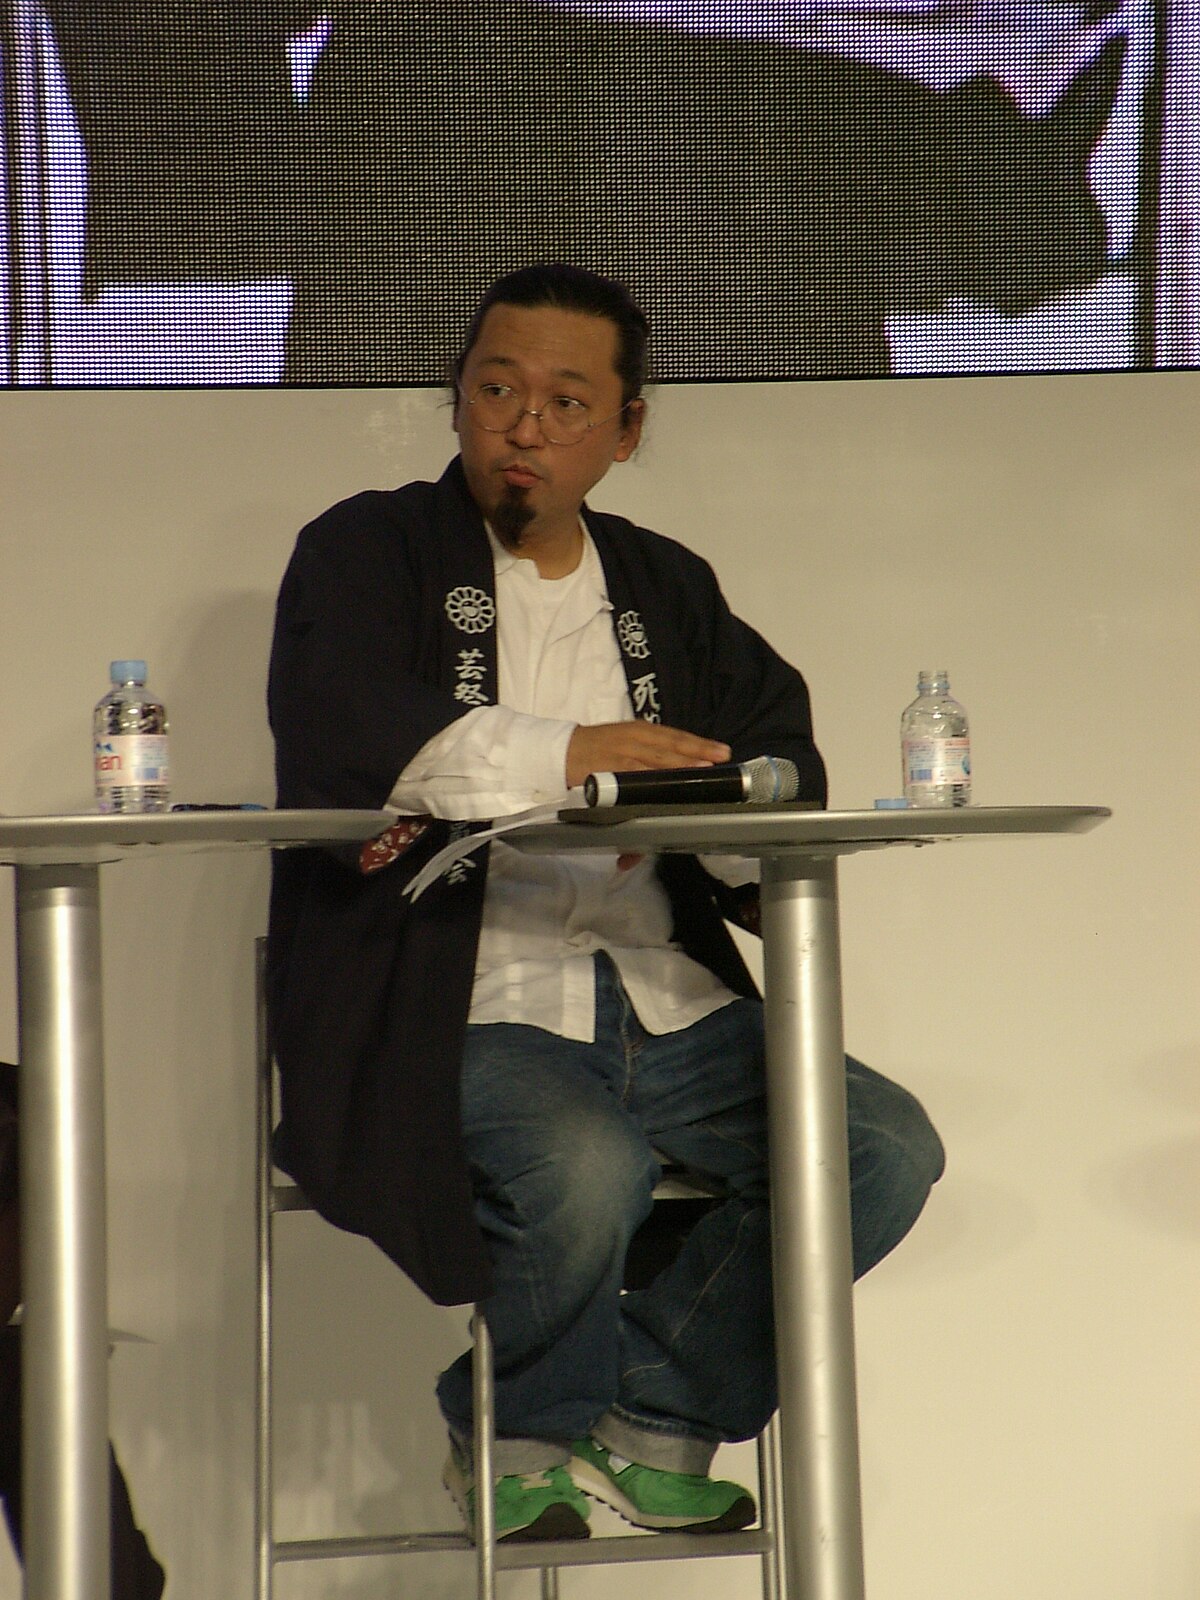 Takashi Murakami - Wikipedia